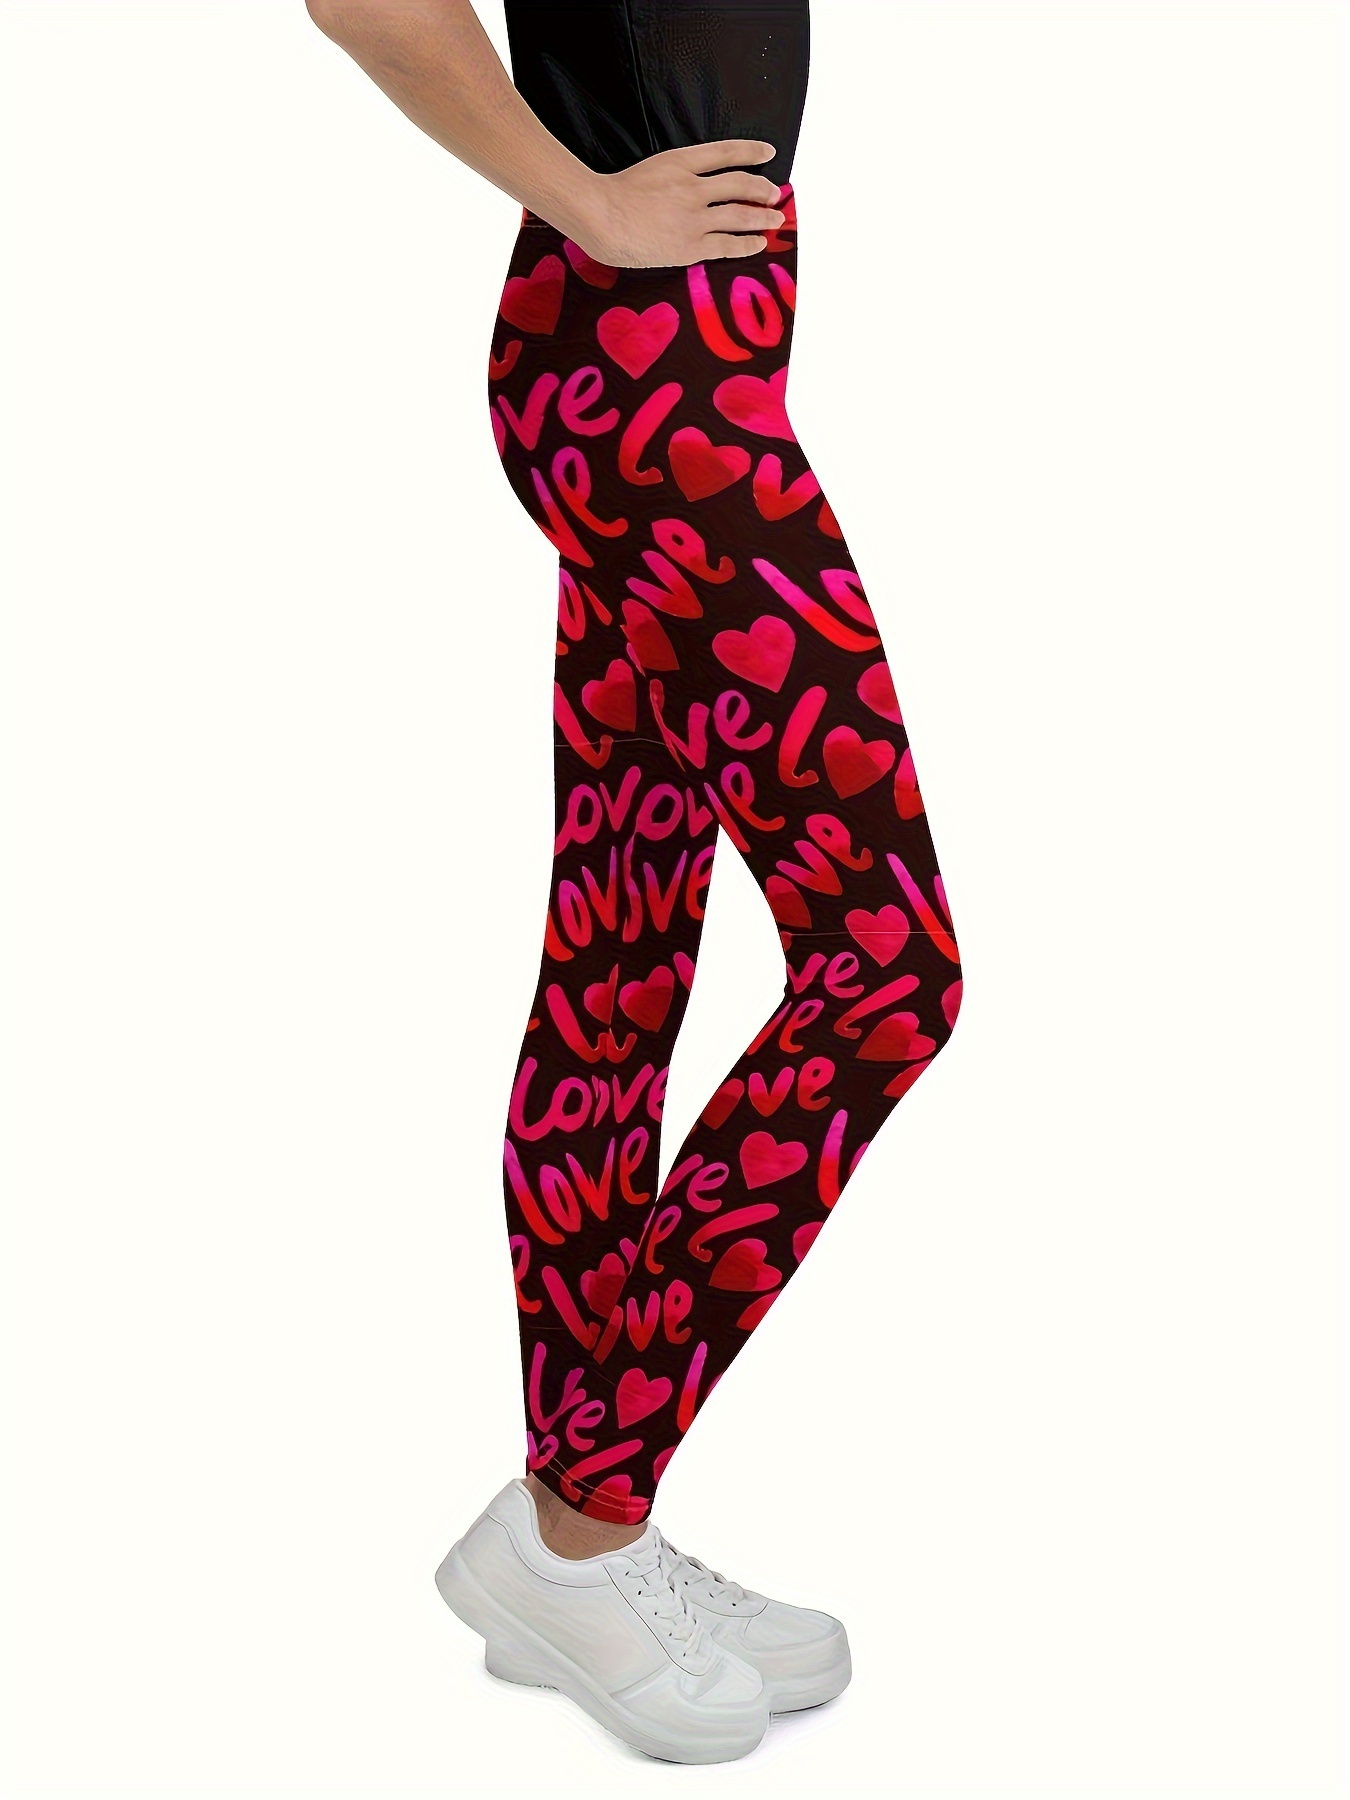 Valentine's Day Gift: LOVE Hearts Print Super Soft Leggings Pants For Girls